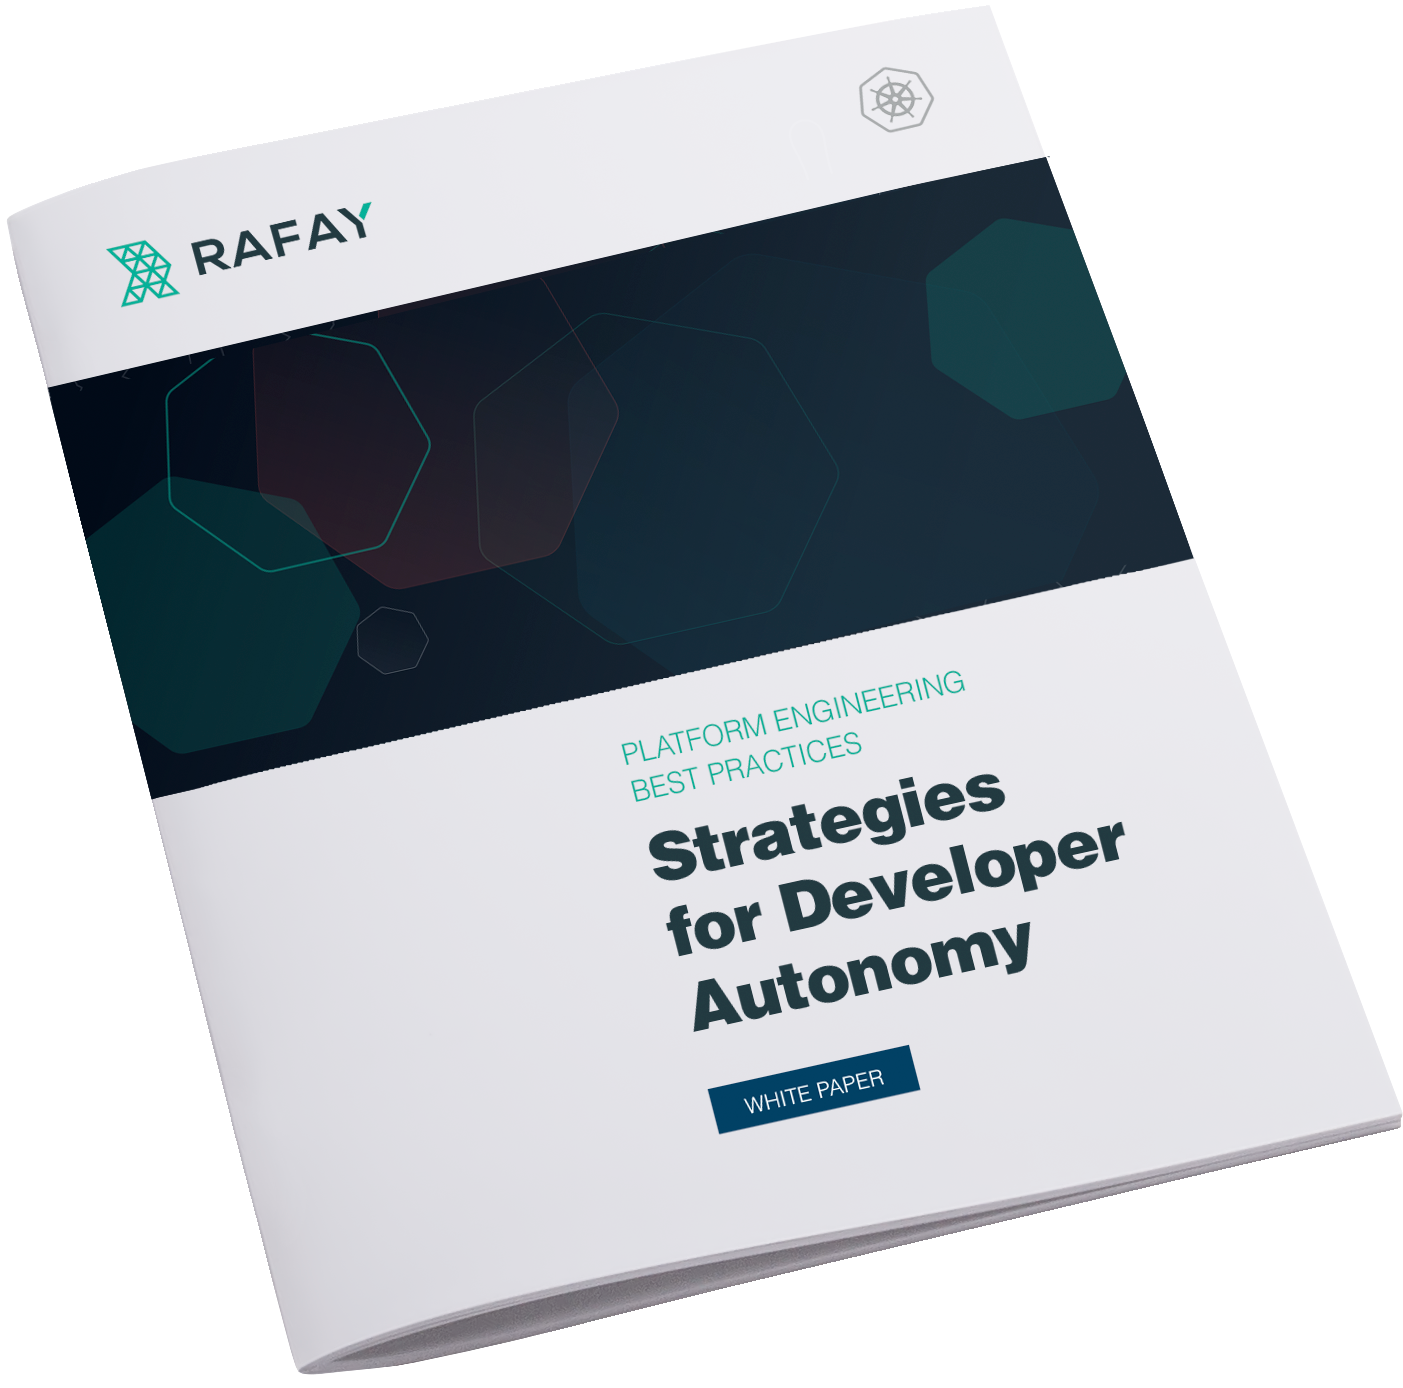 image for Platform Engineering Best Practices: Strategies for Developer Autonomy